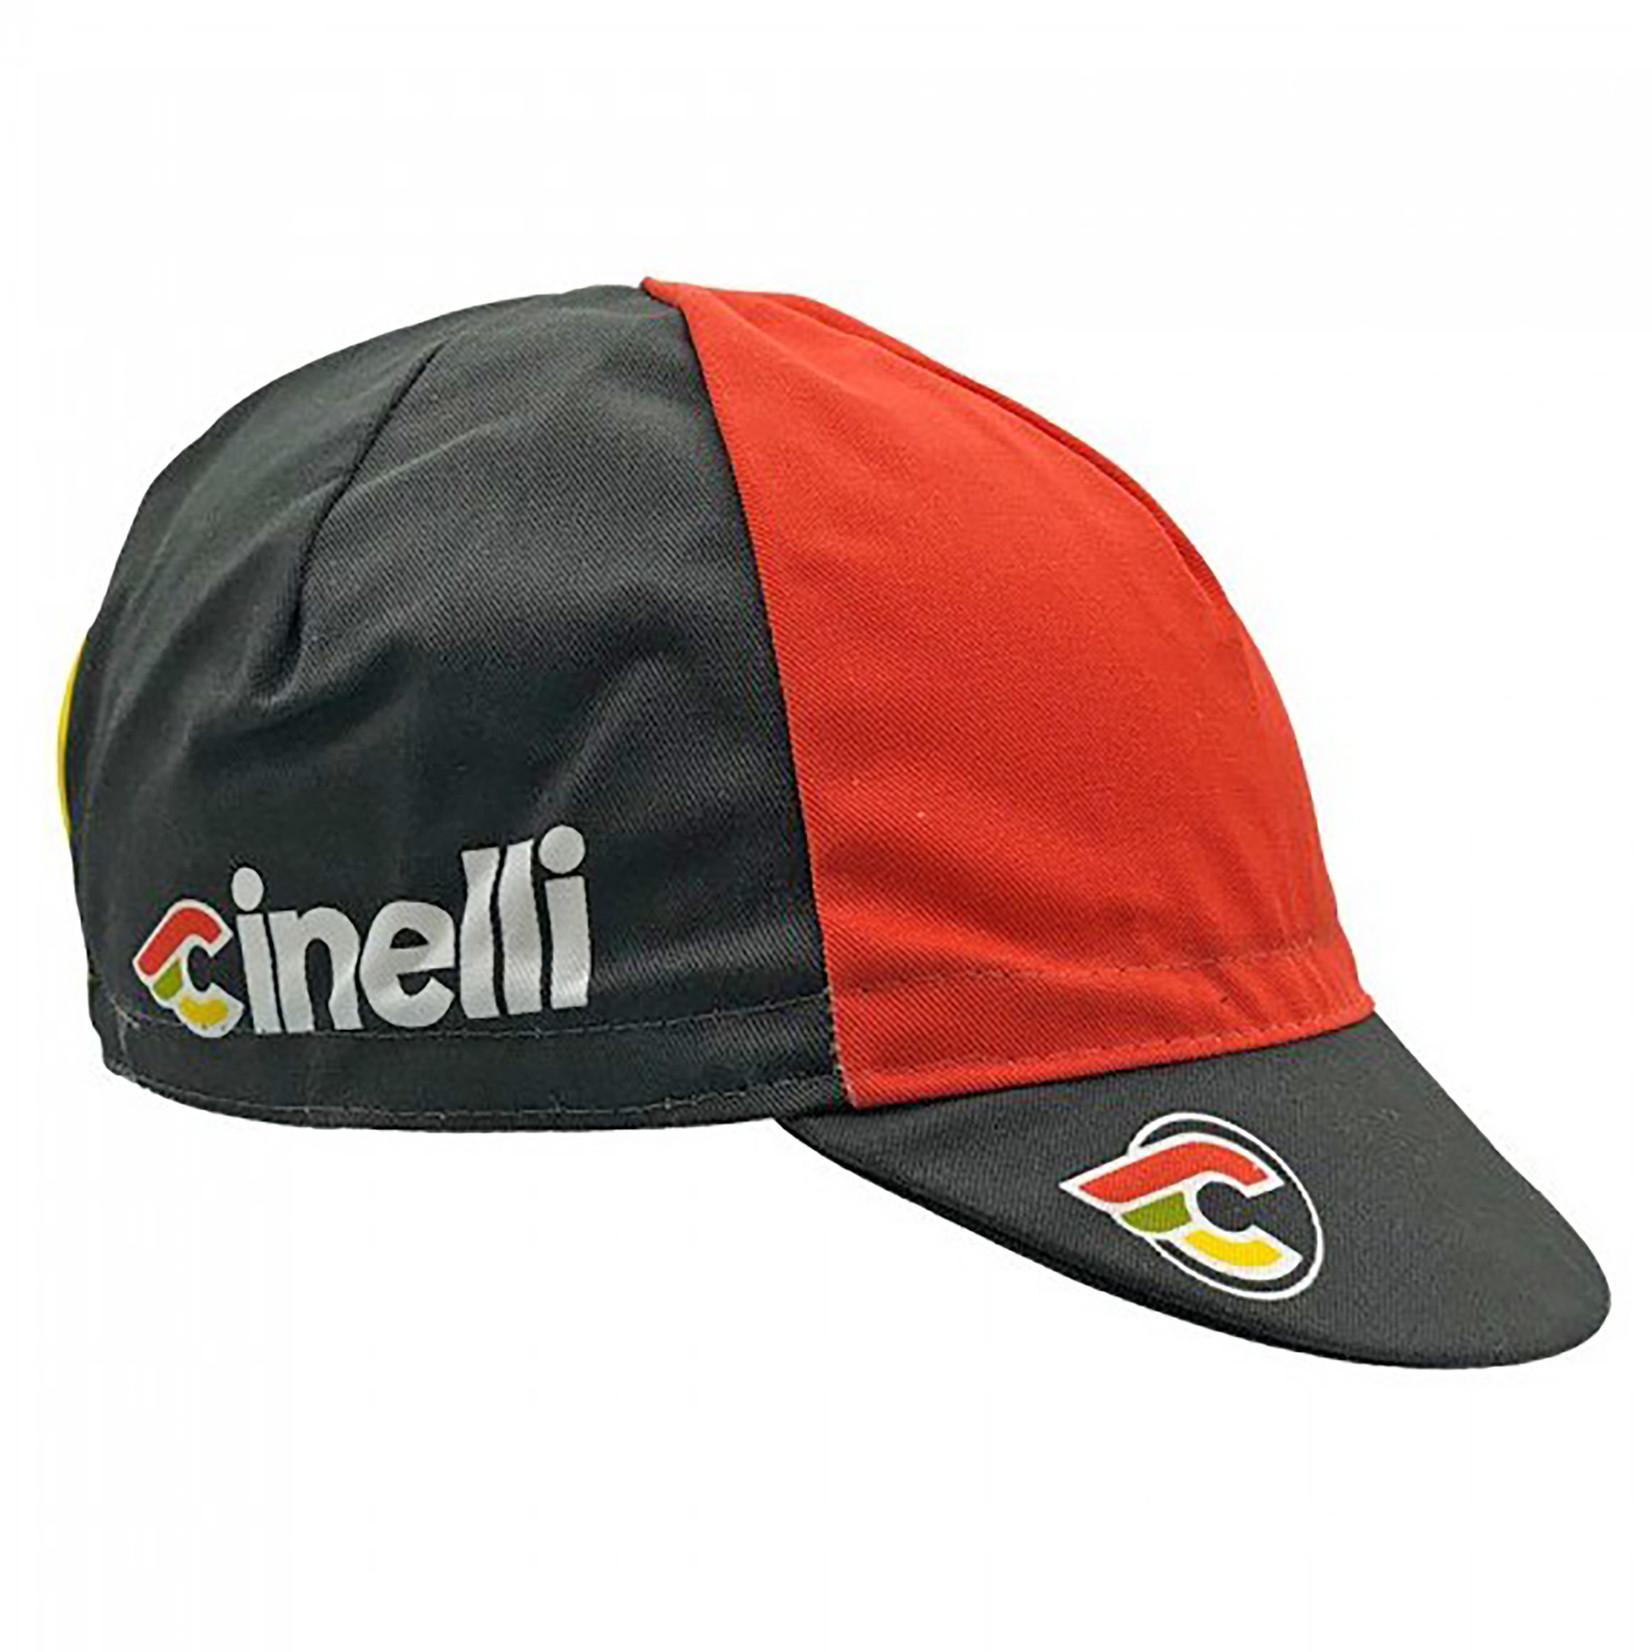 Cinelli Cycling Cap, Italo '79, Black